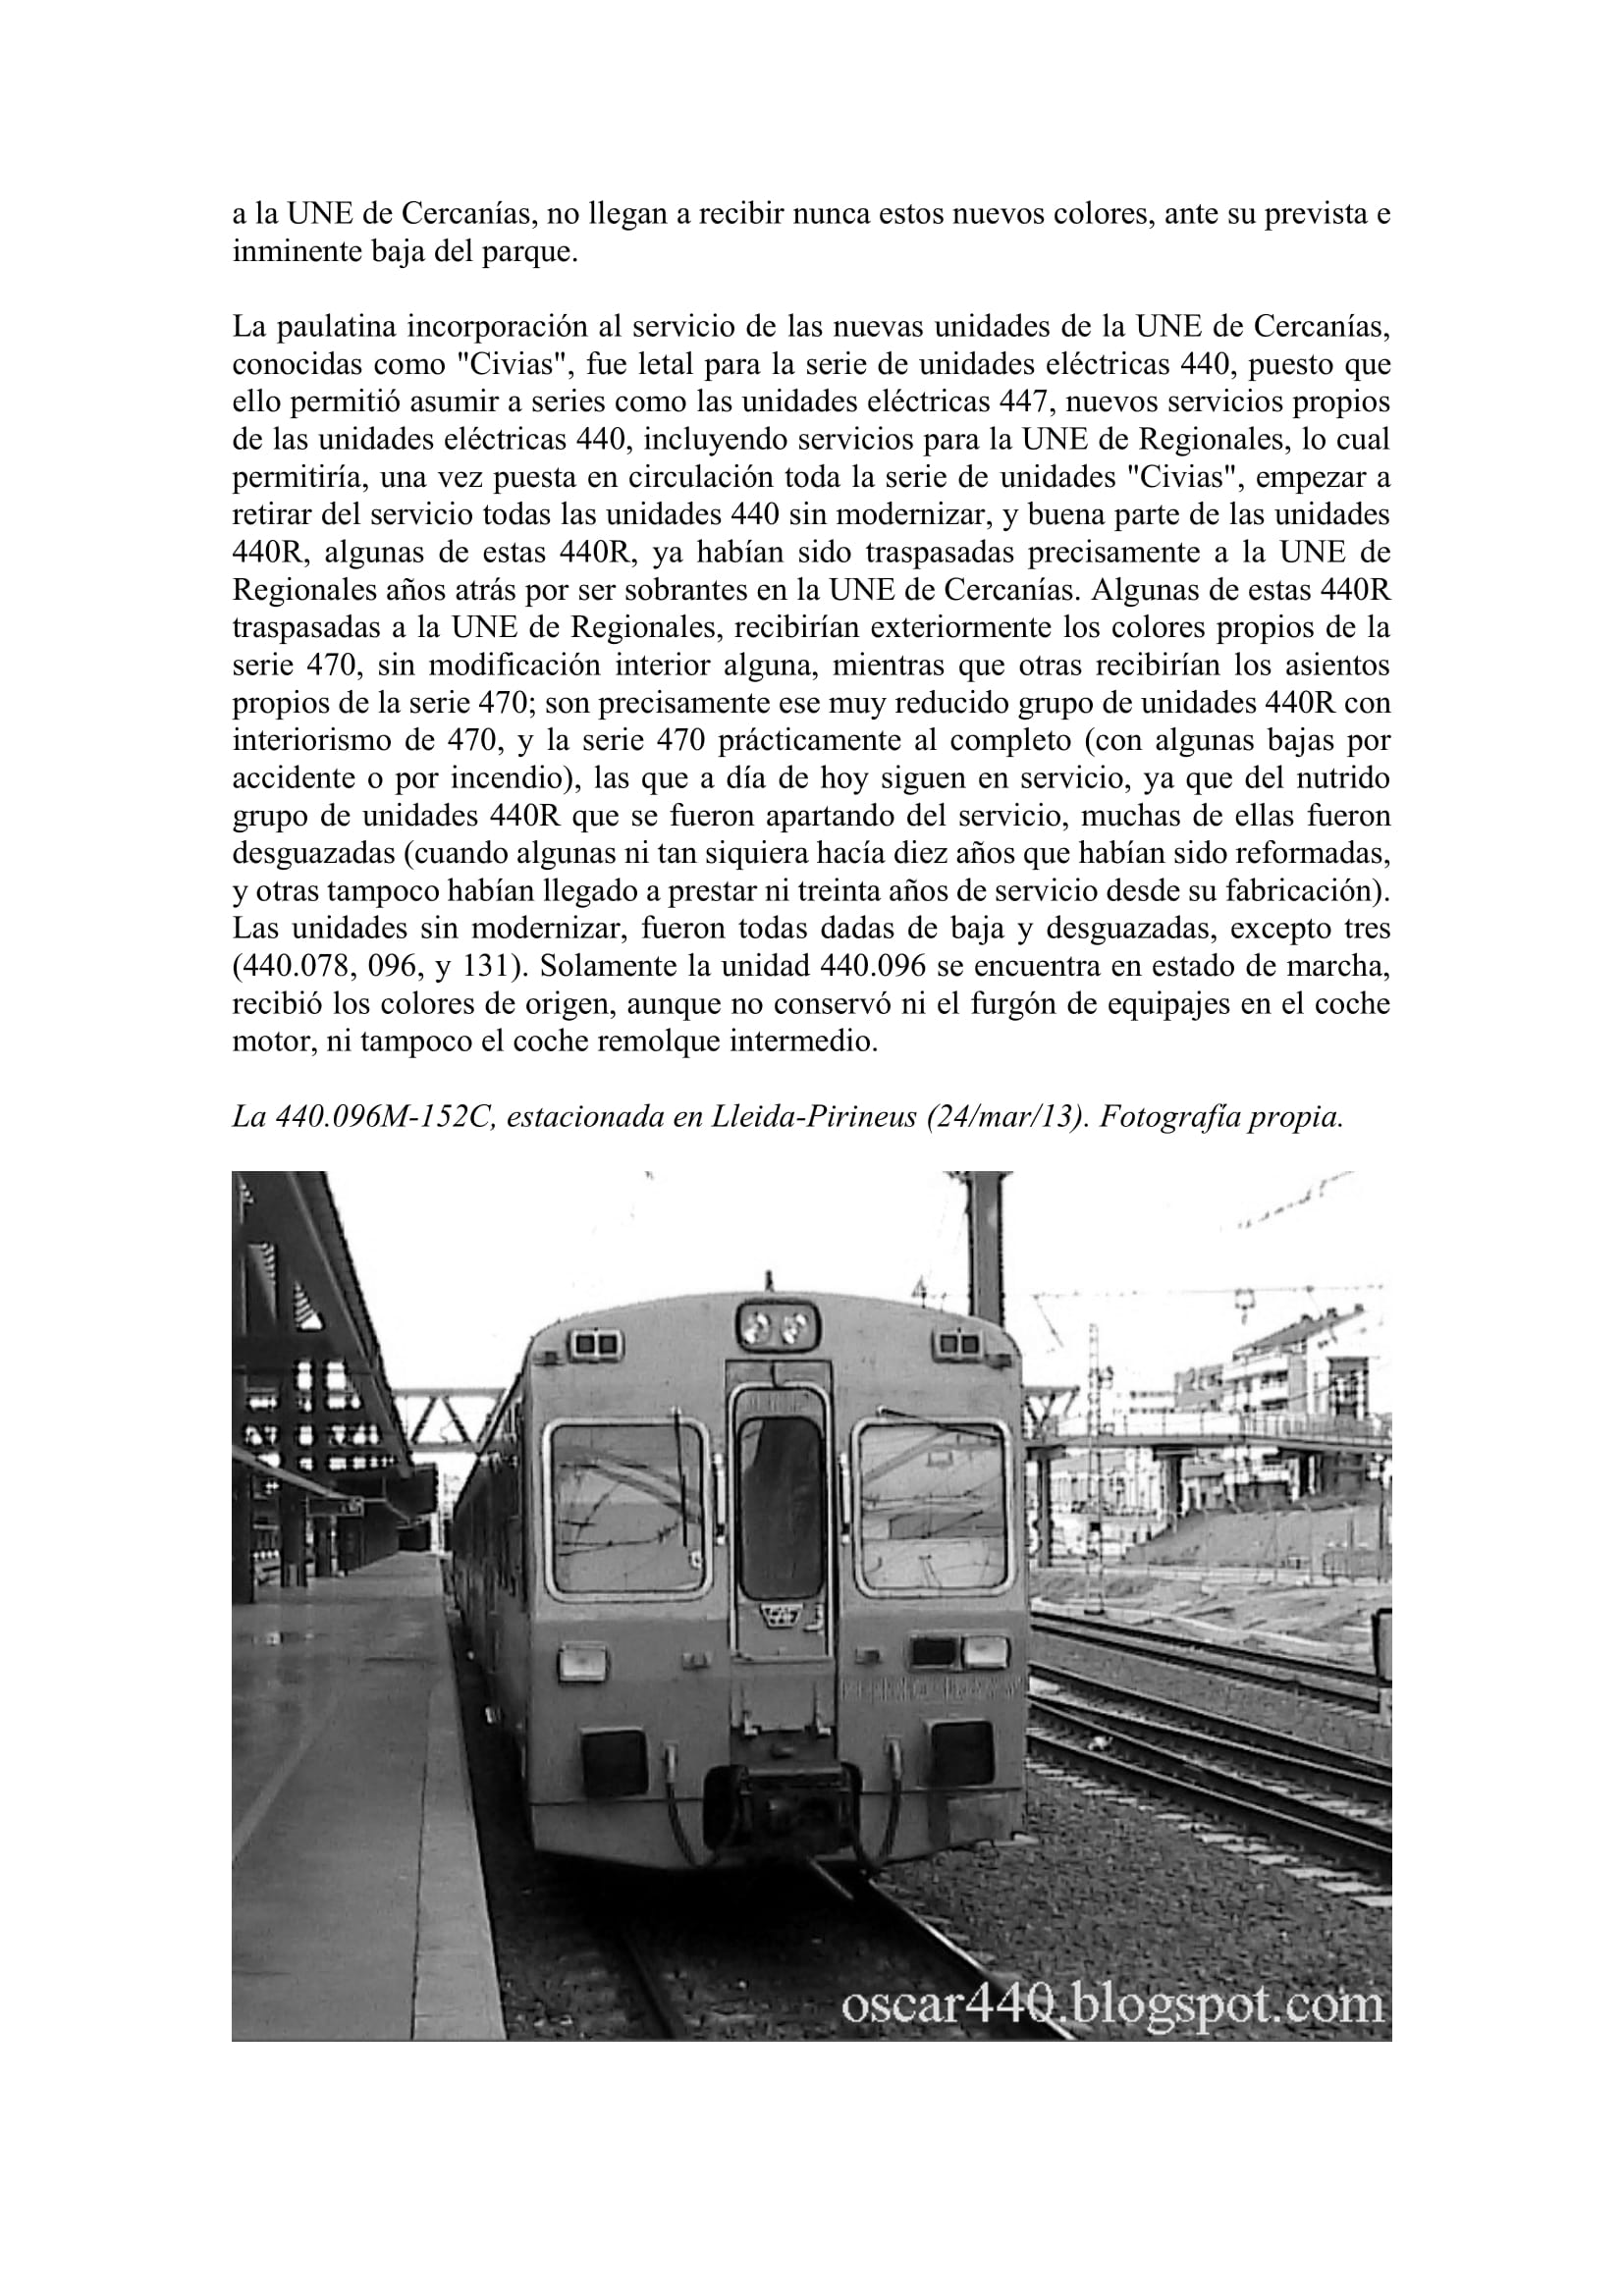 HISTORIA UNIDADES ELECTRICAS SERIE 440 RENFE - 4.jpg